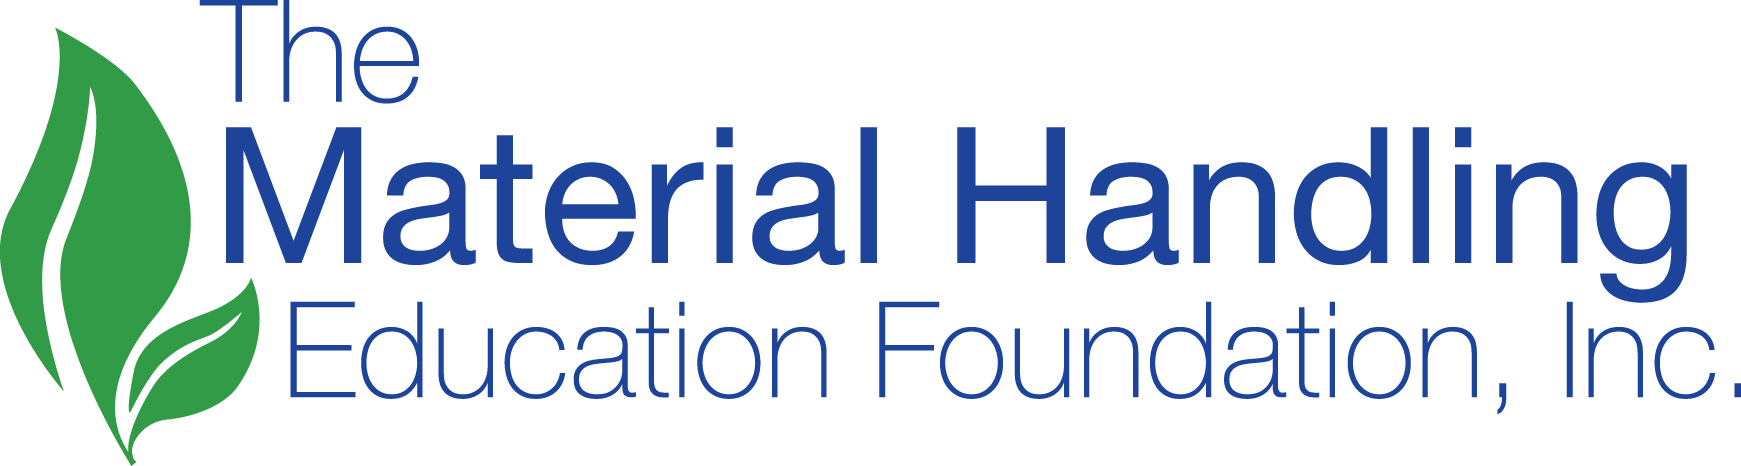 Material Handling Education Foundation, Inc. logo